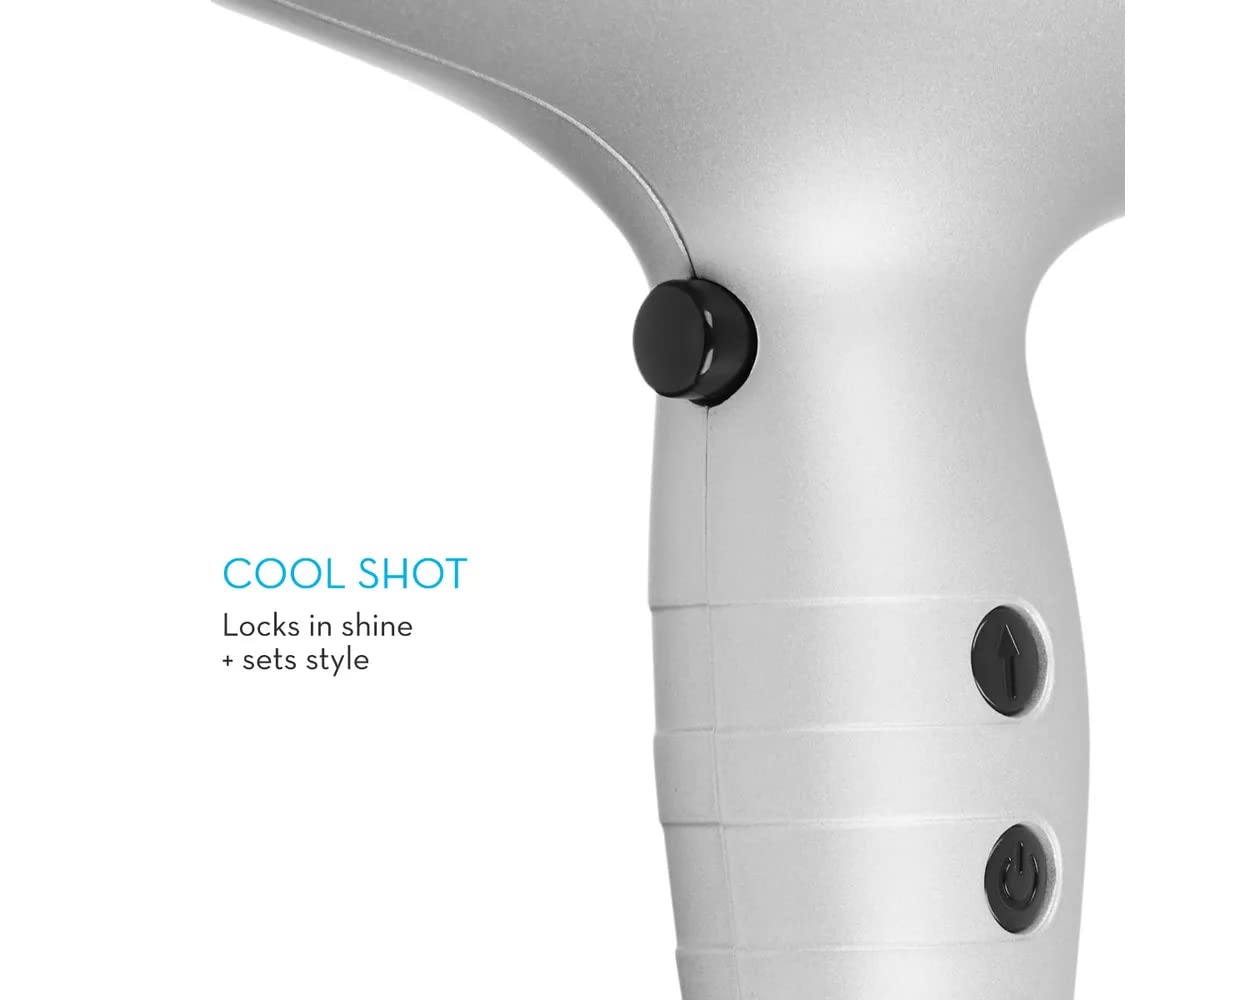 Paul Mitchell Neuro Light Tourmaline Hair Dryer, Multiple Heat + Speed Settings, Cool Shot Button